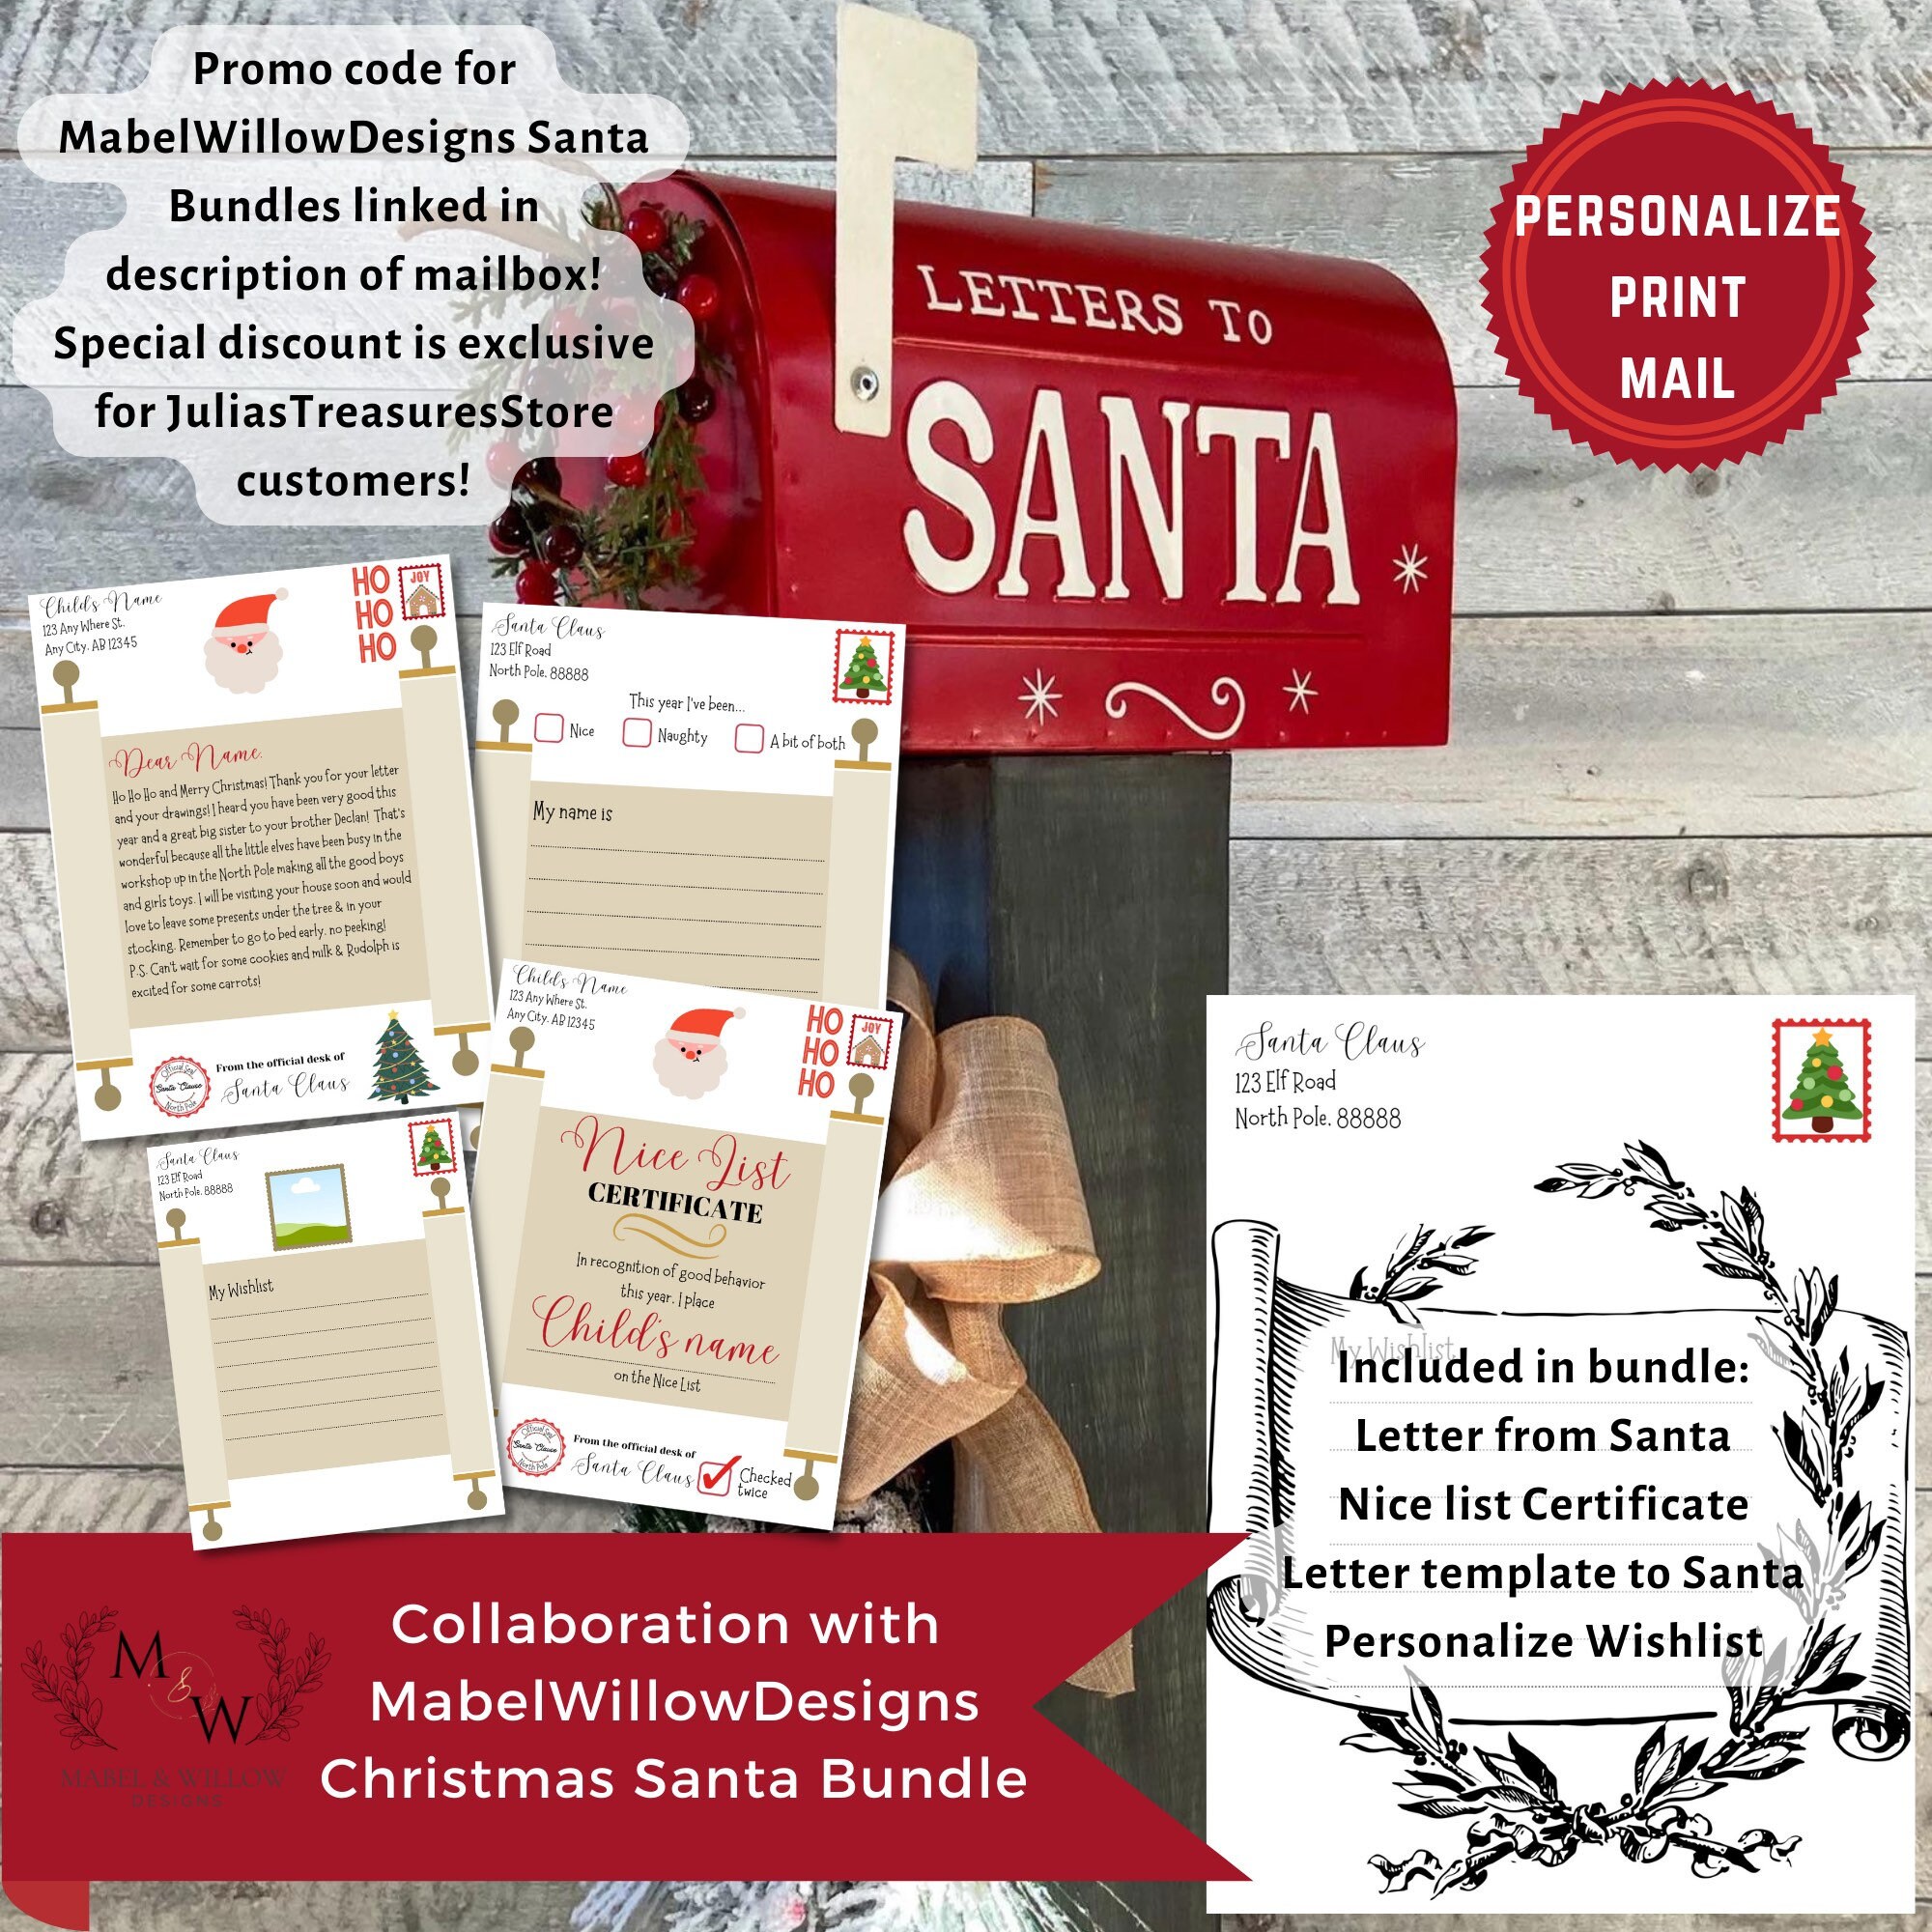 Sunset Vista Designs Santa's Mailbox - Letters for Santa 